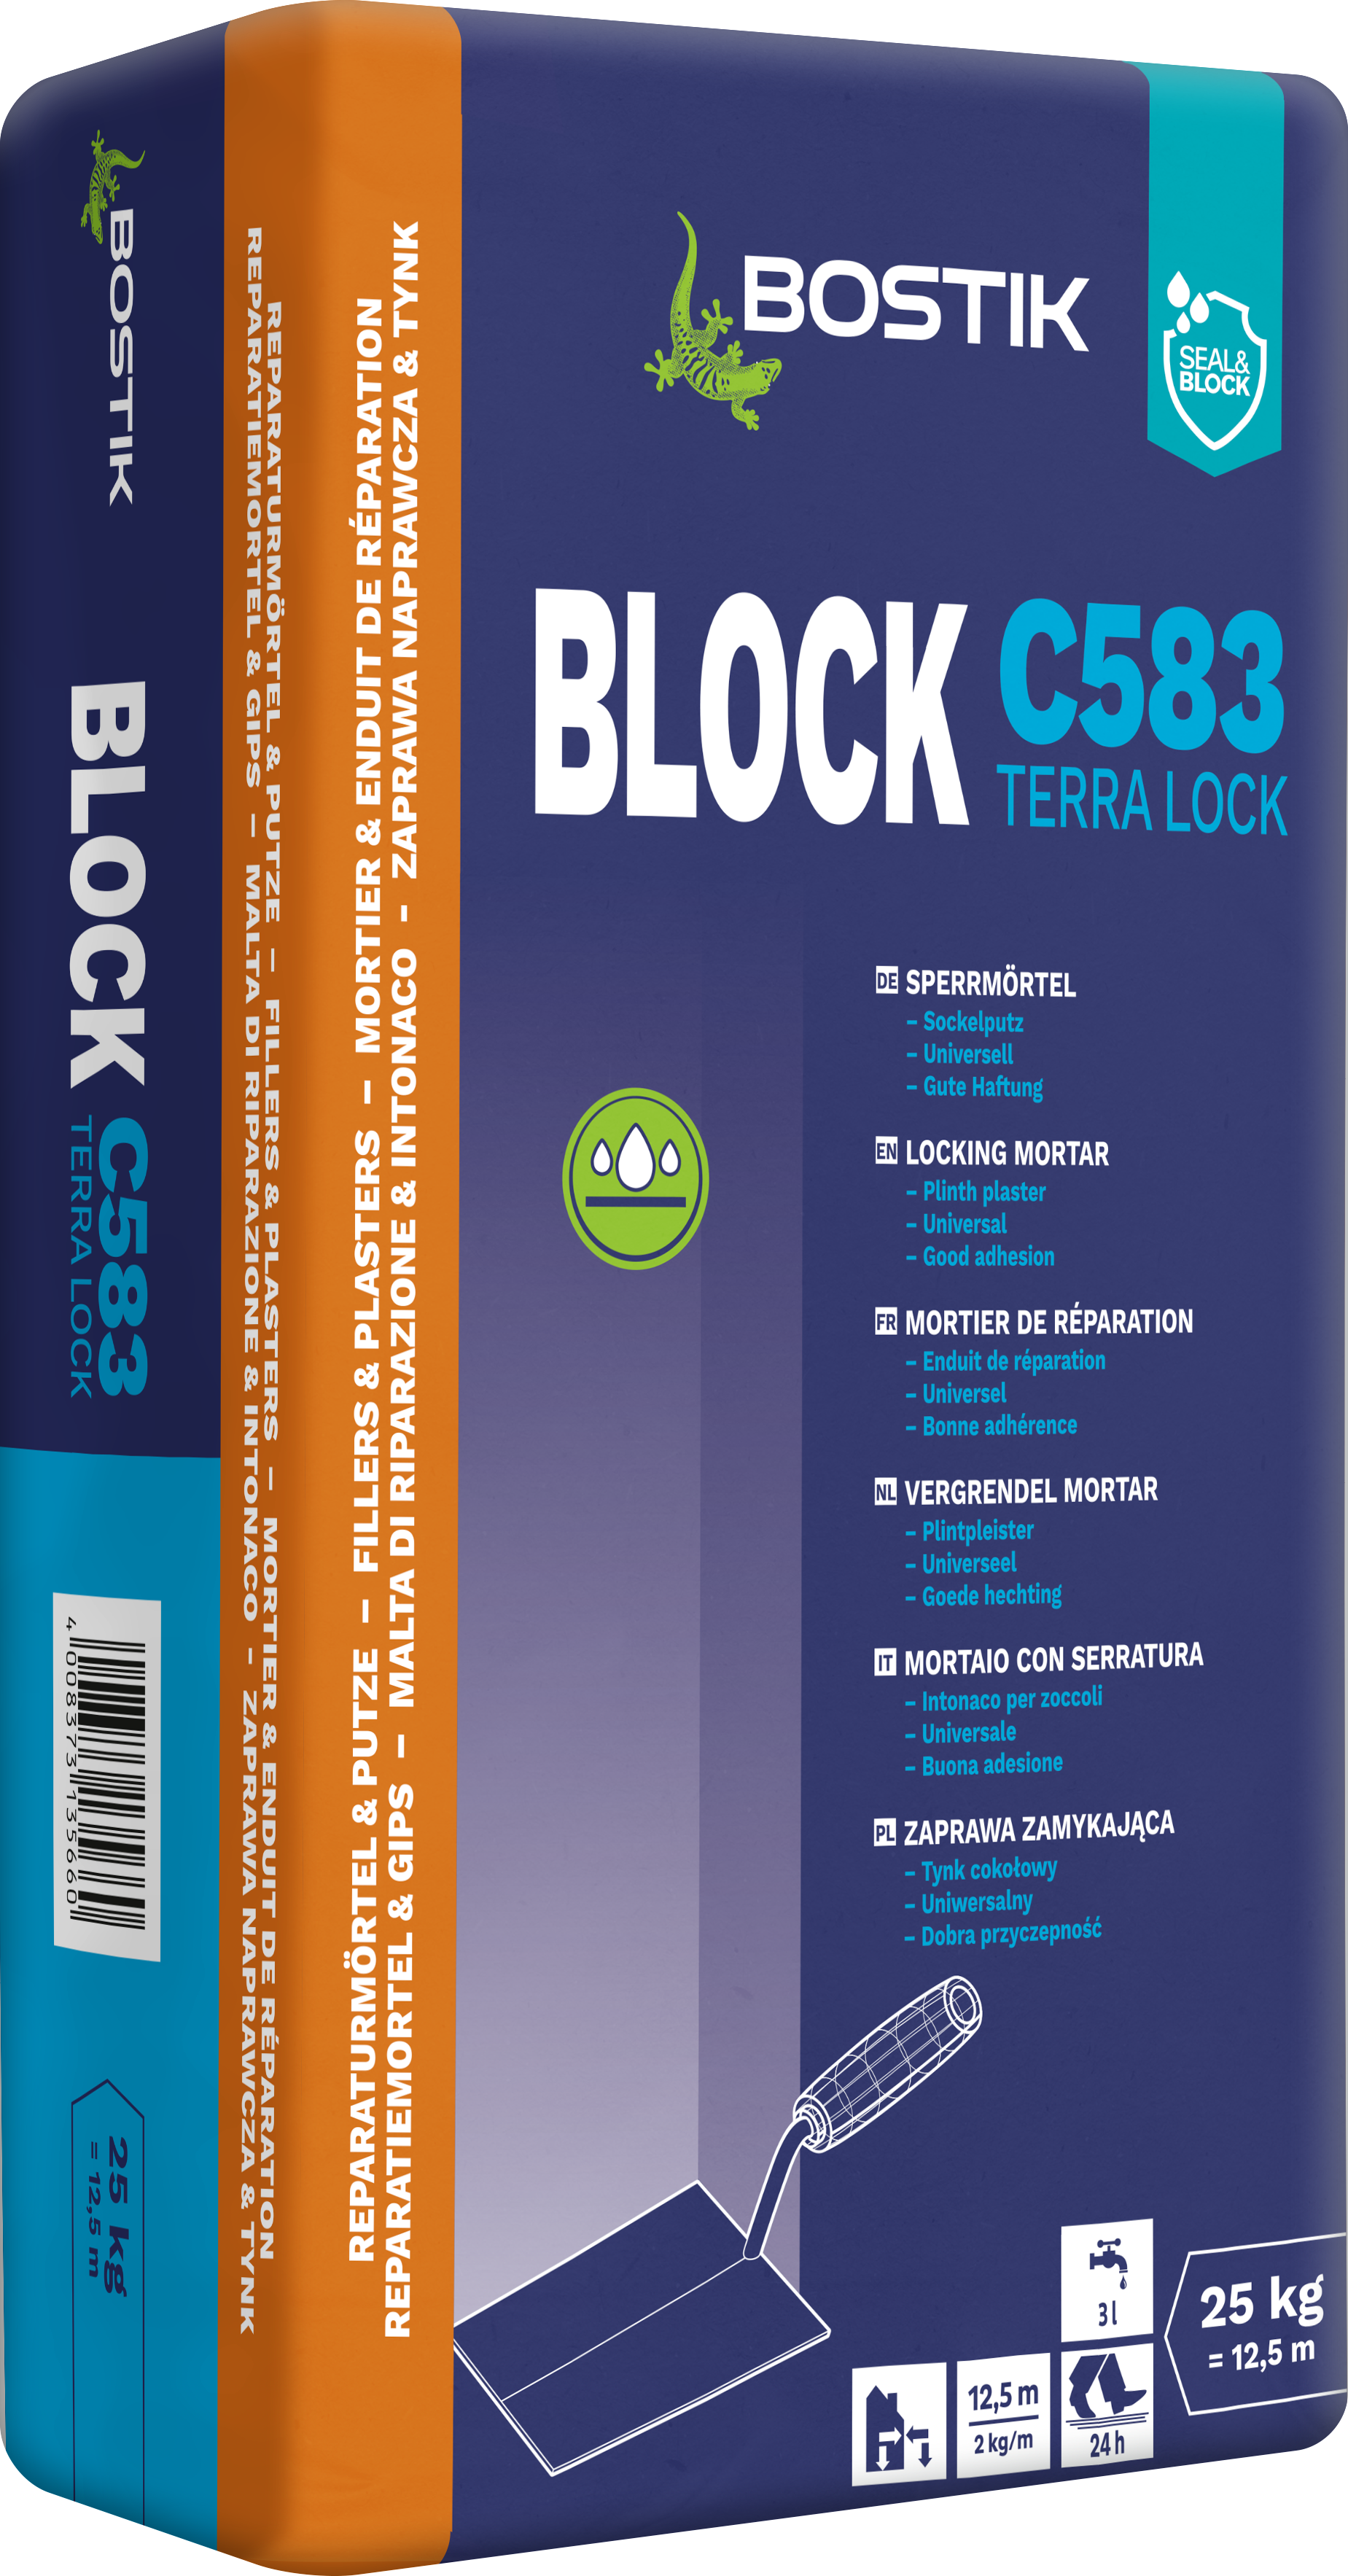 BOSTIK BLOCK C583 TERRA LOCK